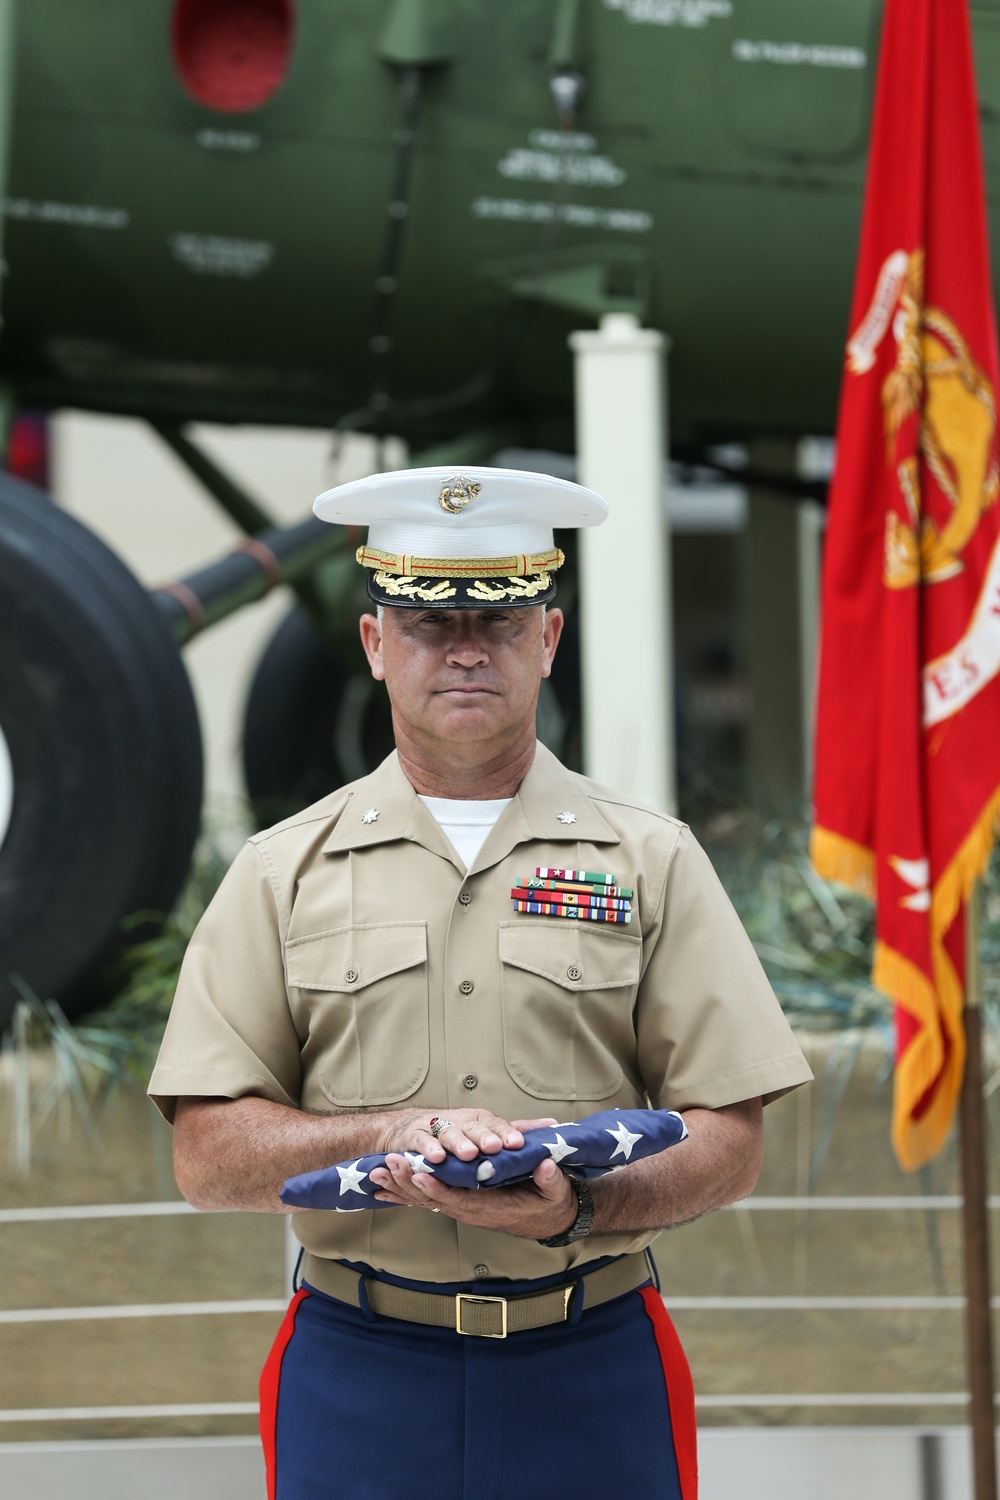 DVIDS - Images - Lt. Col. Richard Owens Retirement Ceremony [Image 6 of 6]